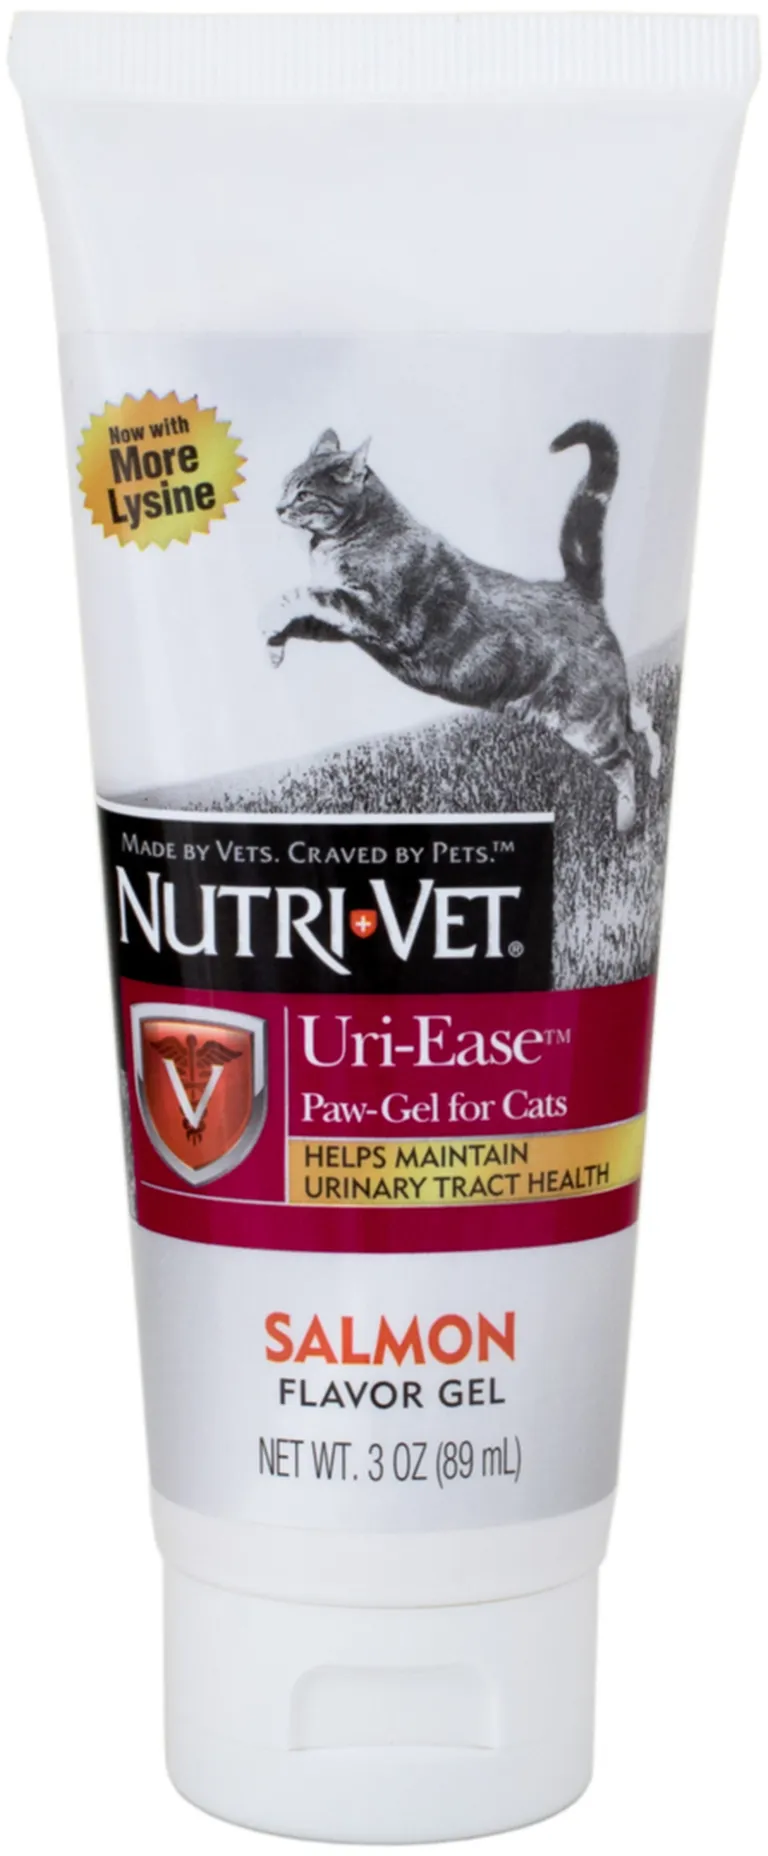 Nutri-Vet Uri-Ease Paw Gel for Cats Salmon Flavor Photo 2